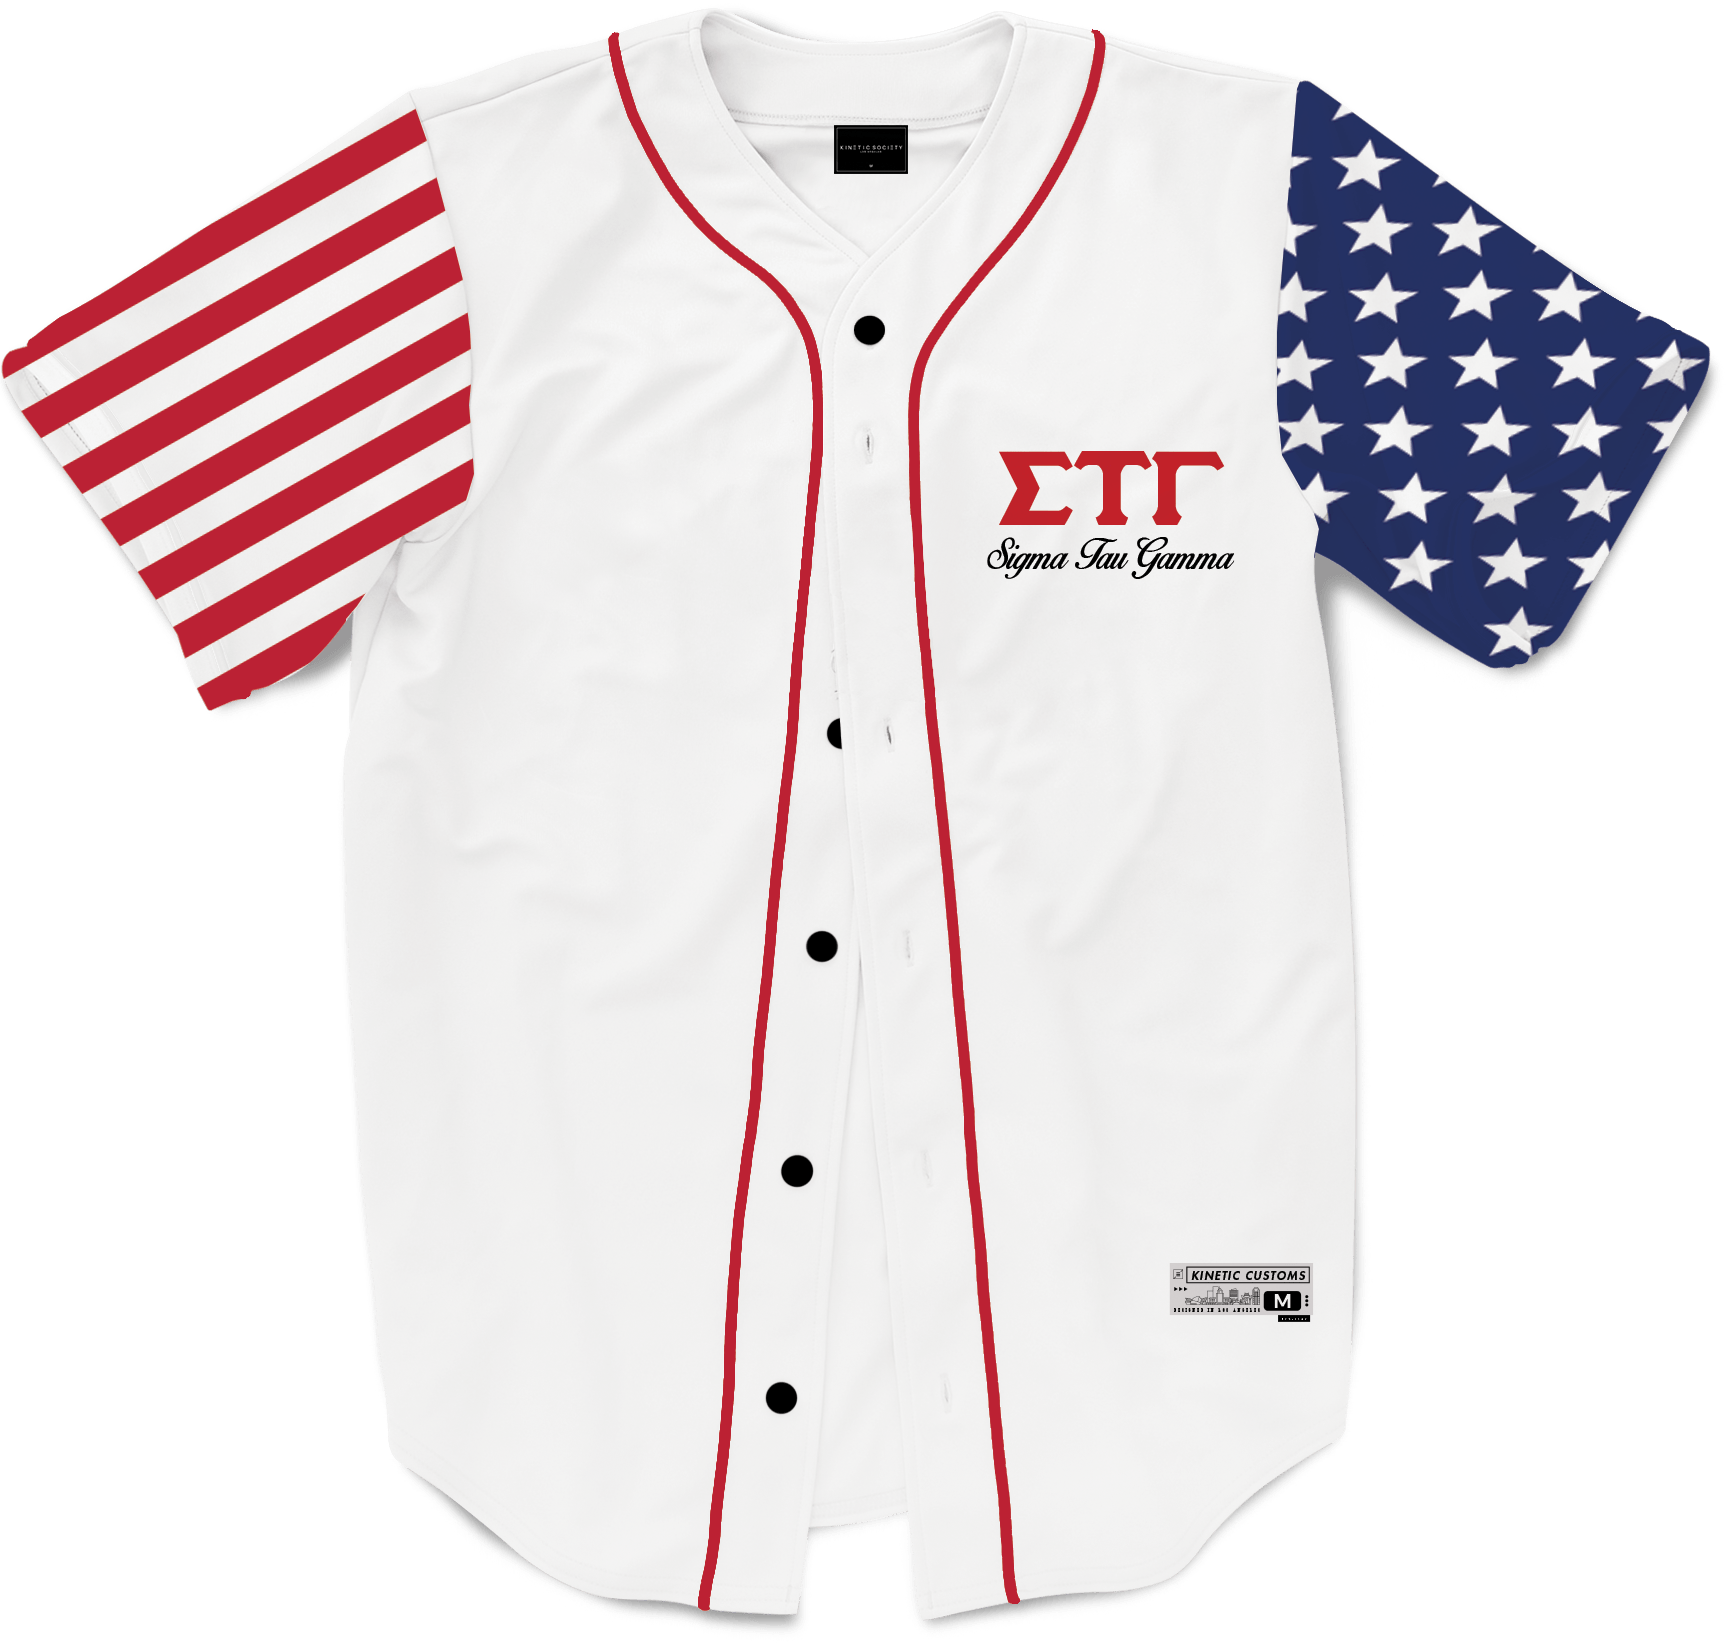 Sigma Tau Gamma - Flagship Baseball Jersey - Kinetic Society